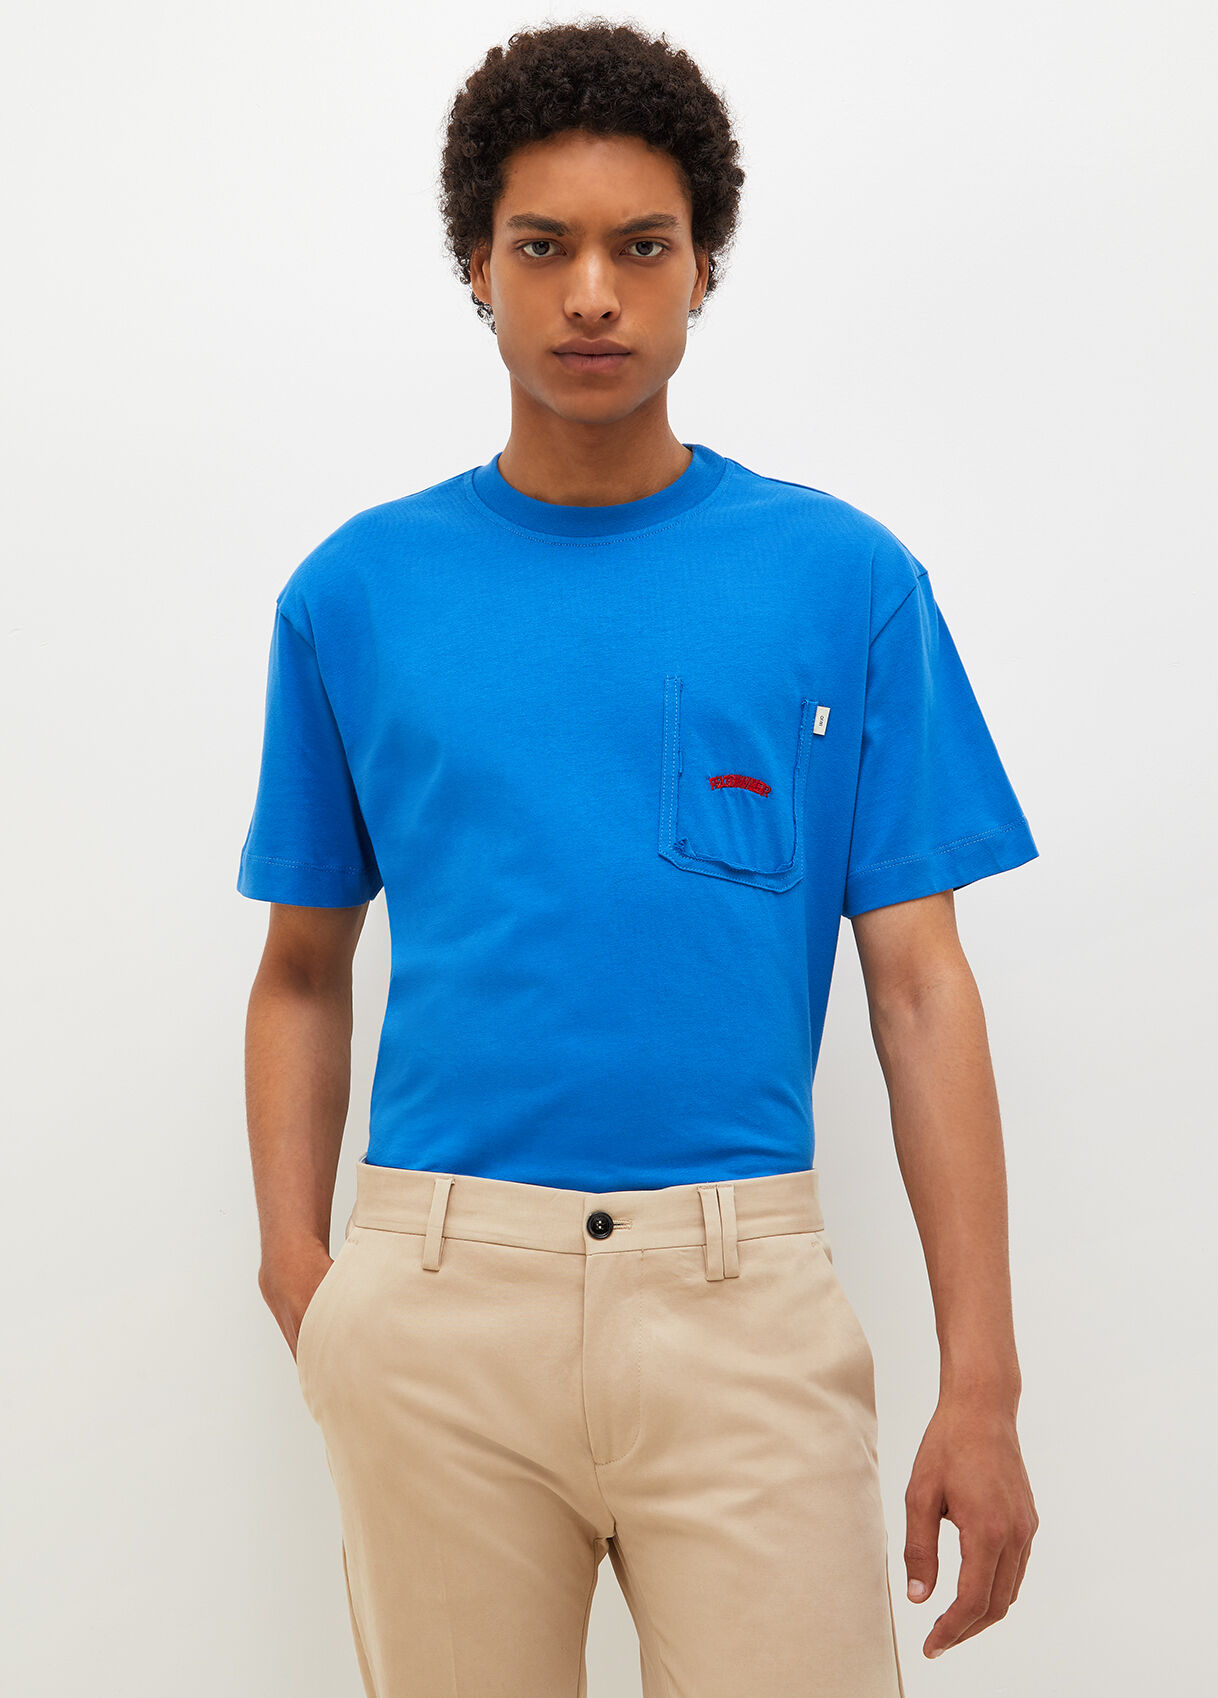 Mode Shirts Netshirts Liu jo Netshirt wit-blauw gestreept patroon elegant 